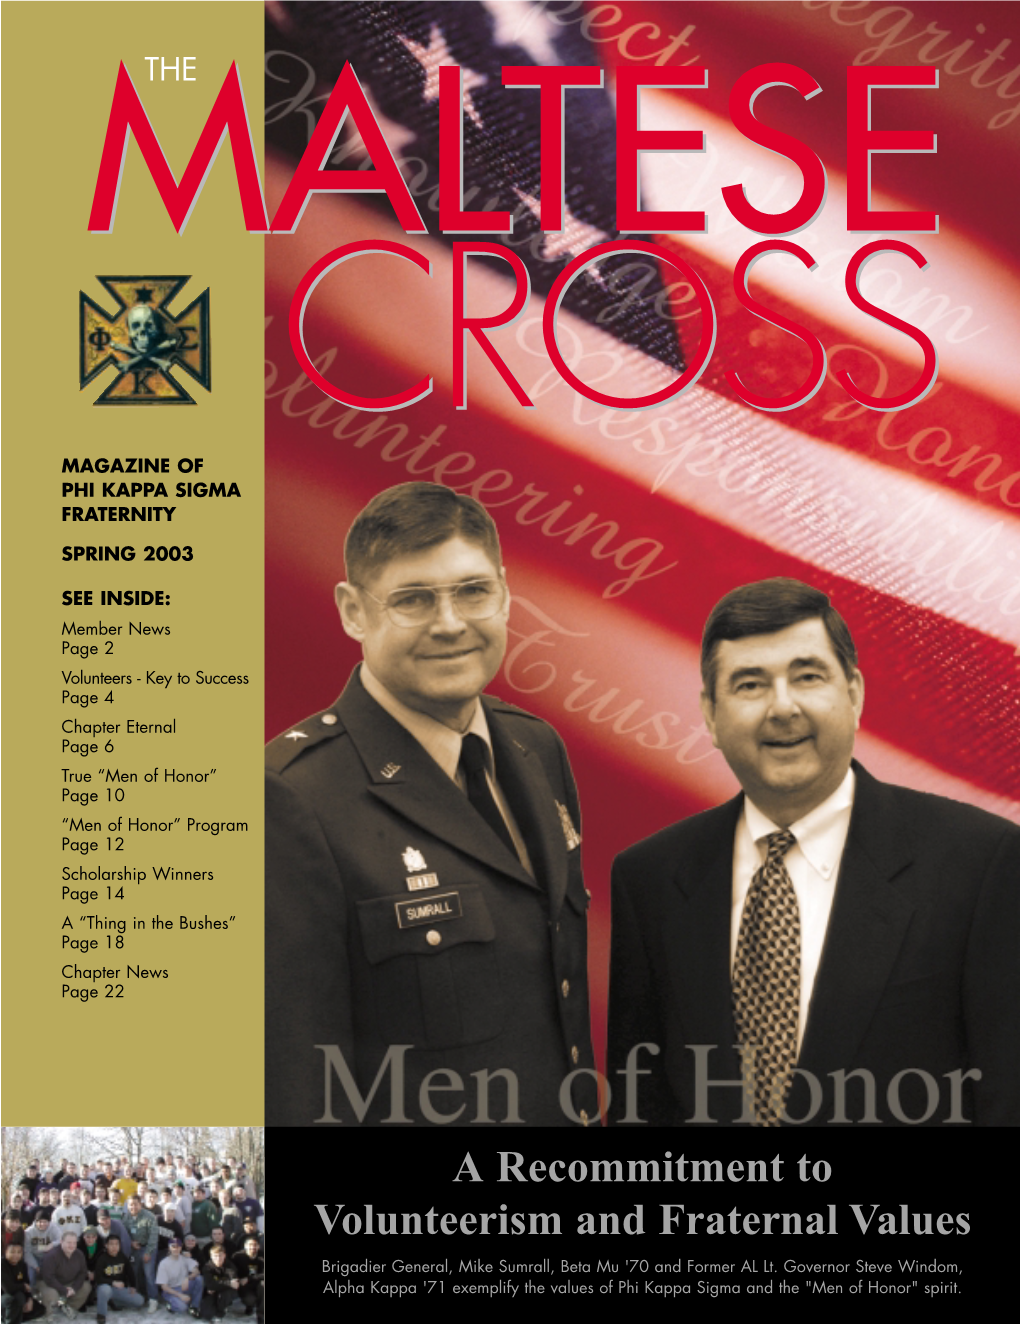 Maltese Crosscross Magazine of Phi Kappa Sigma Fraternity